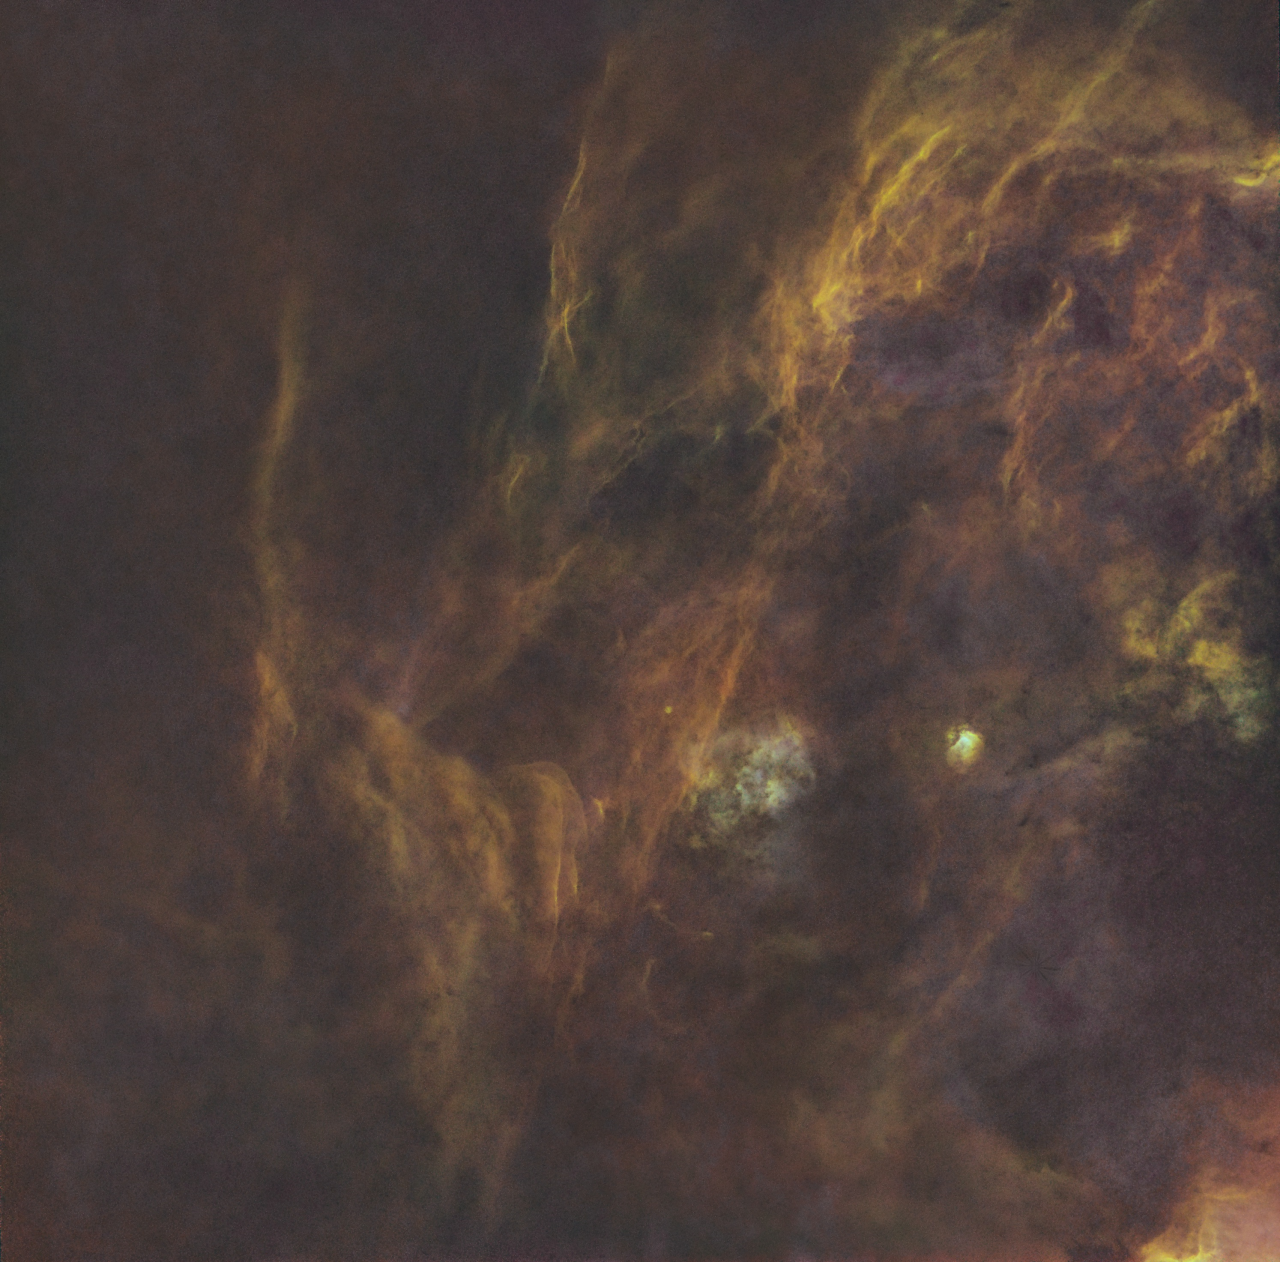 Cygnus near Sh2-115 SHO Sii 43x360s Sii 5x900s Ha 31x360s Oiii 84x360s Starless QuickEdit jpg